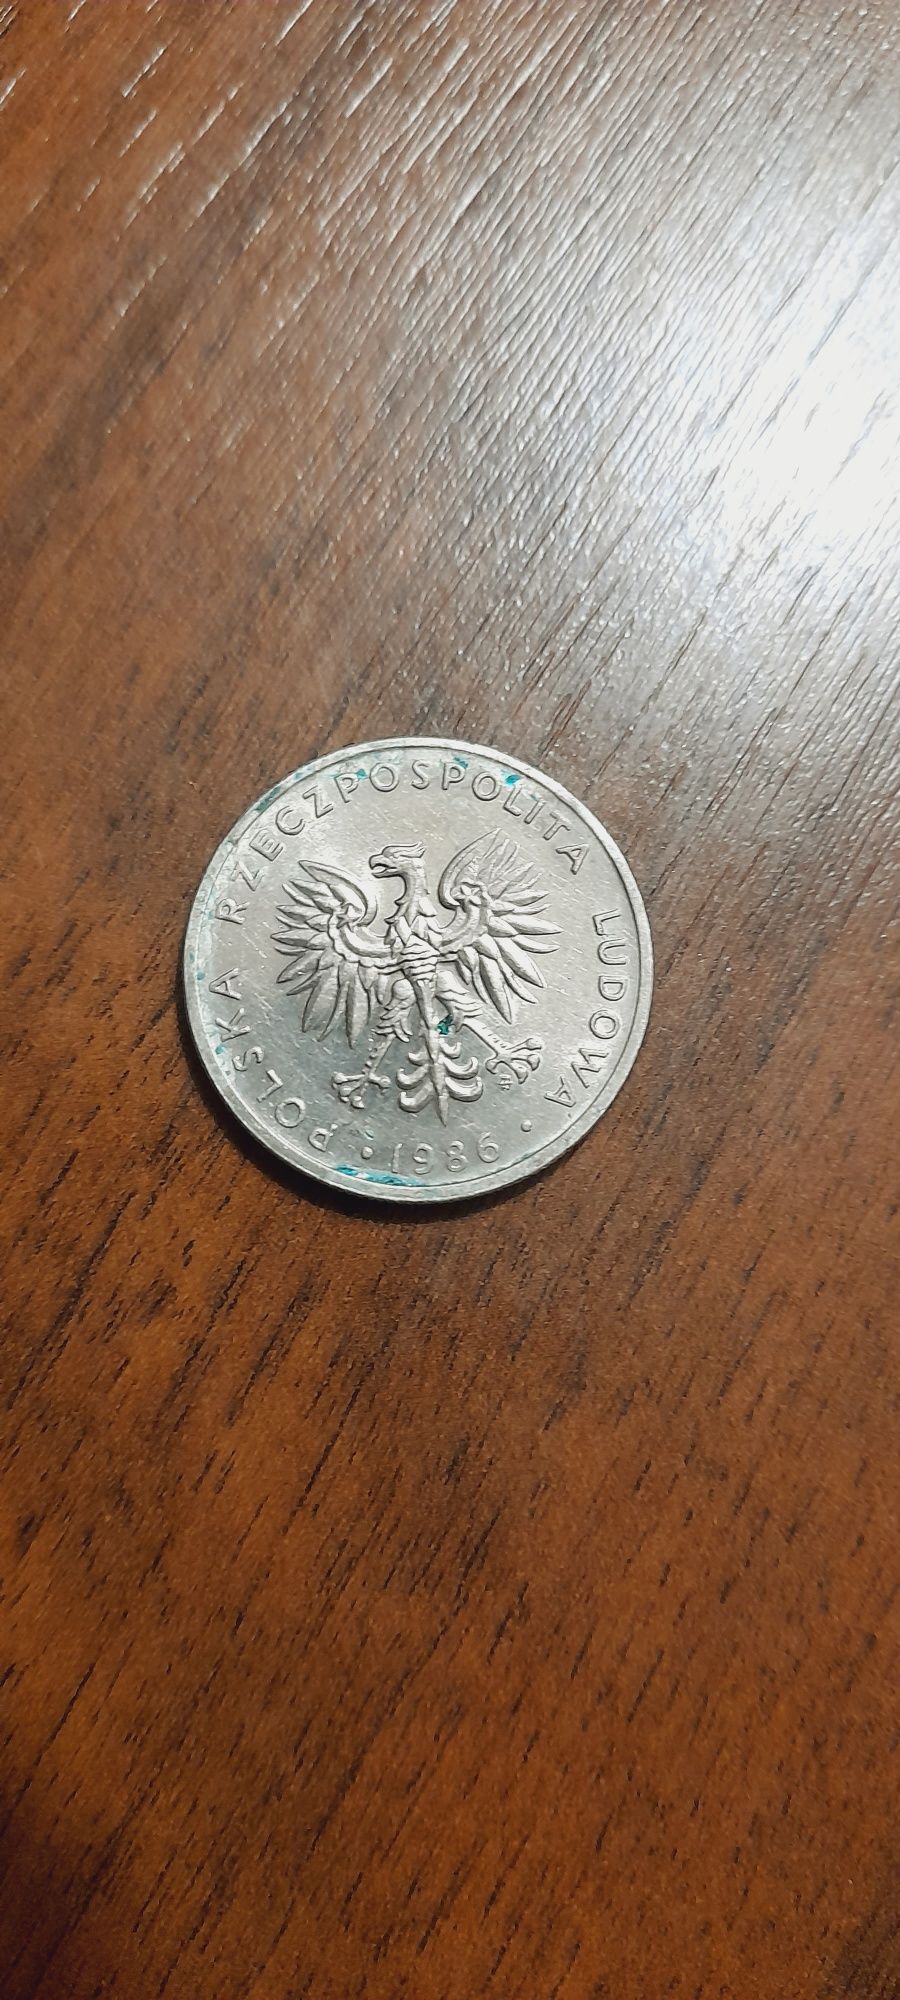 Moneta 20 zł z 1986 r.